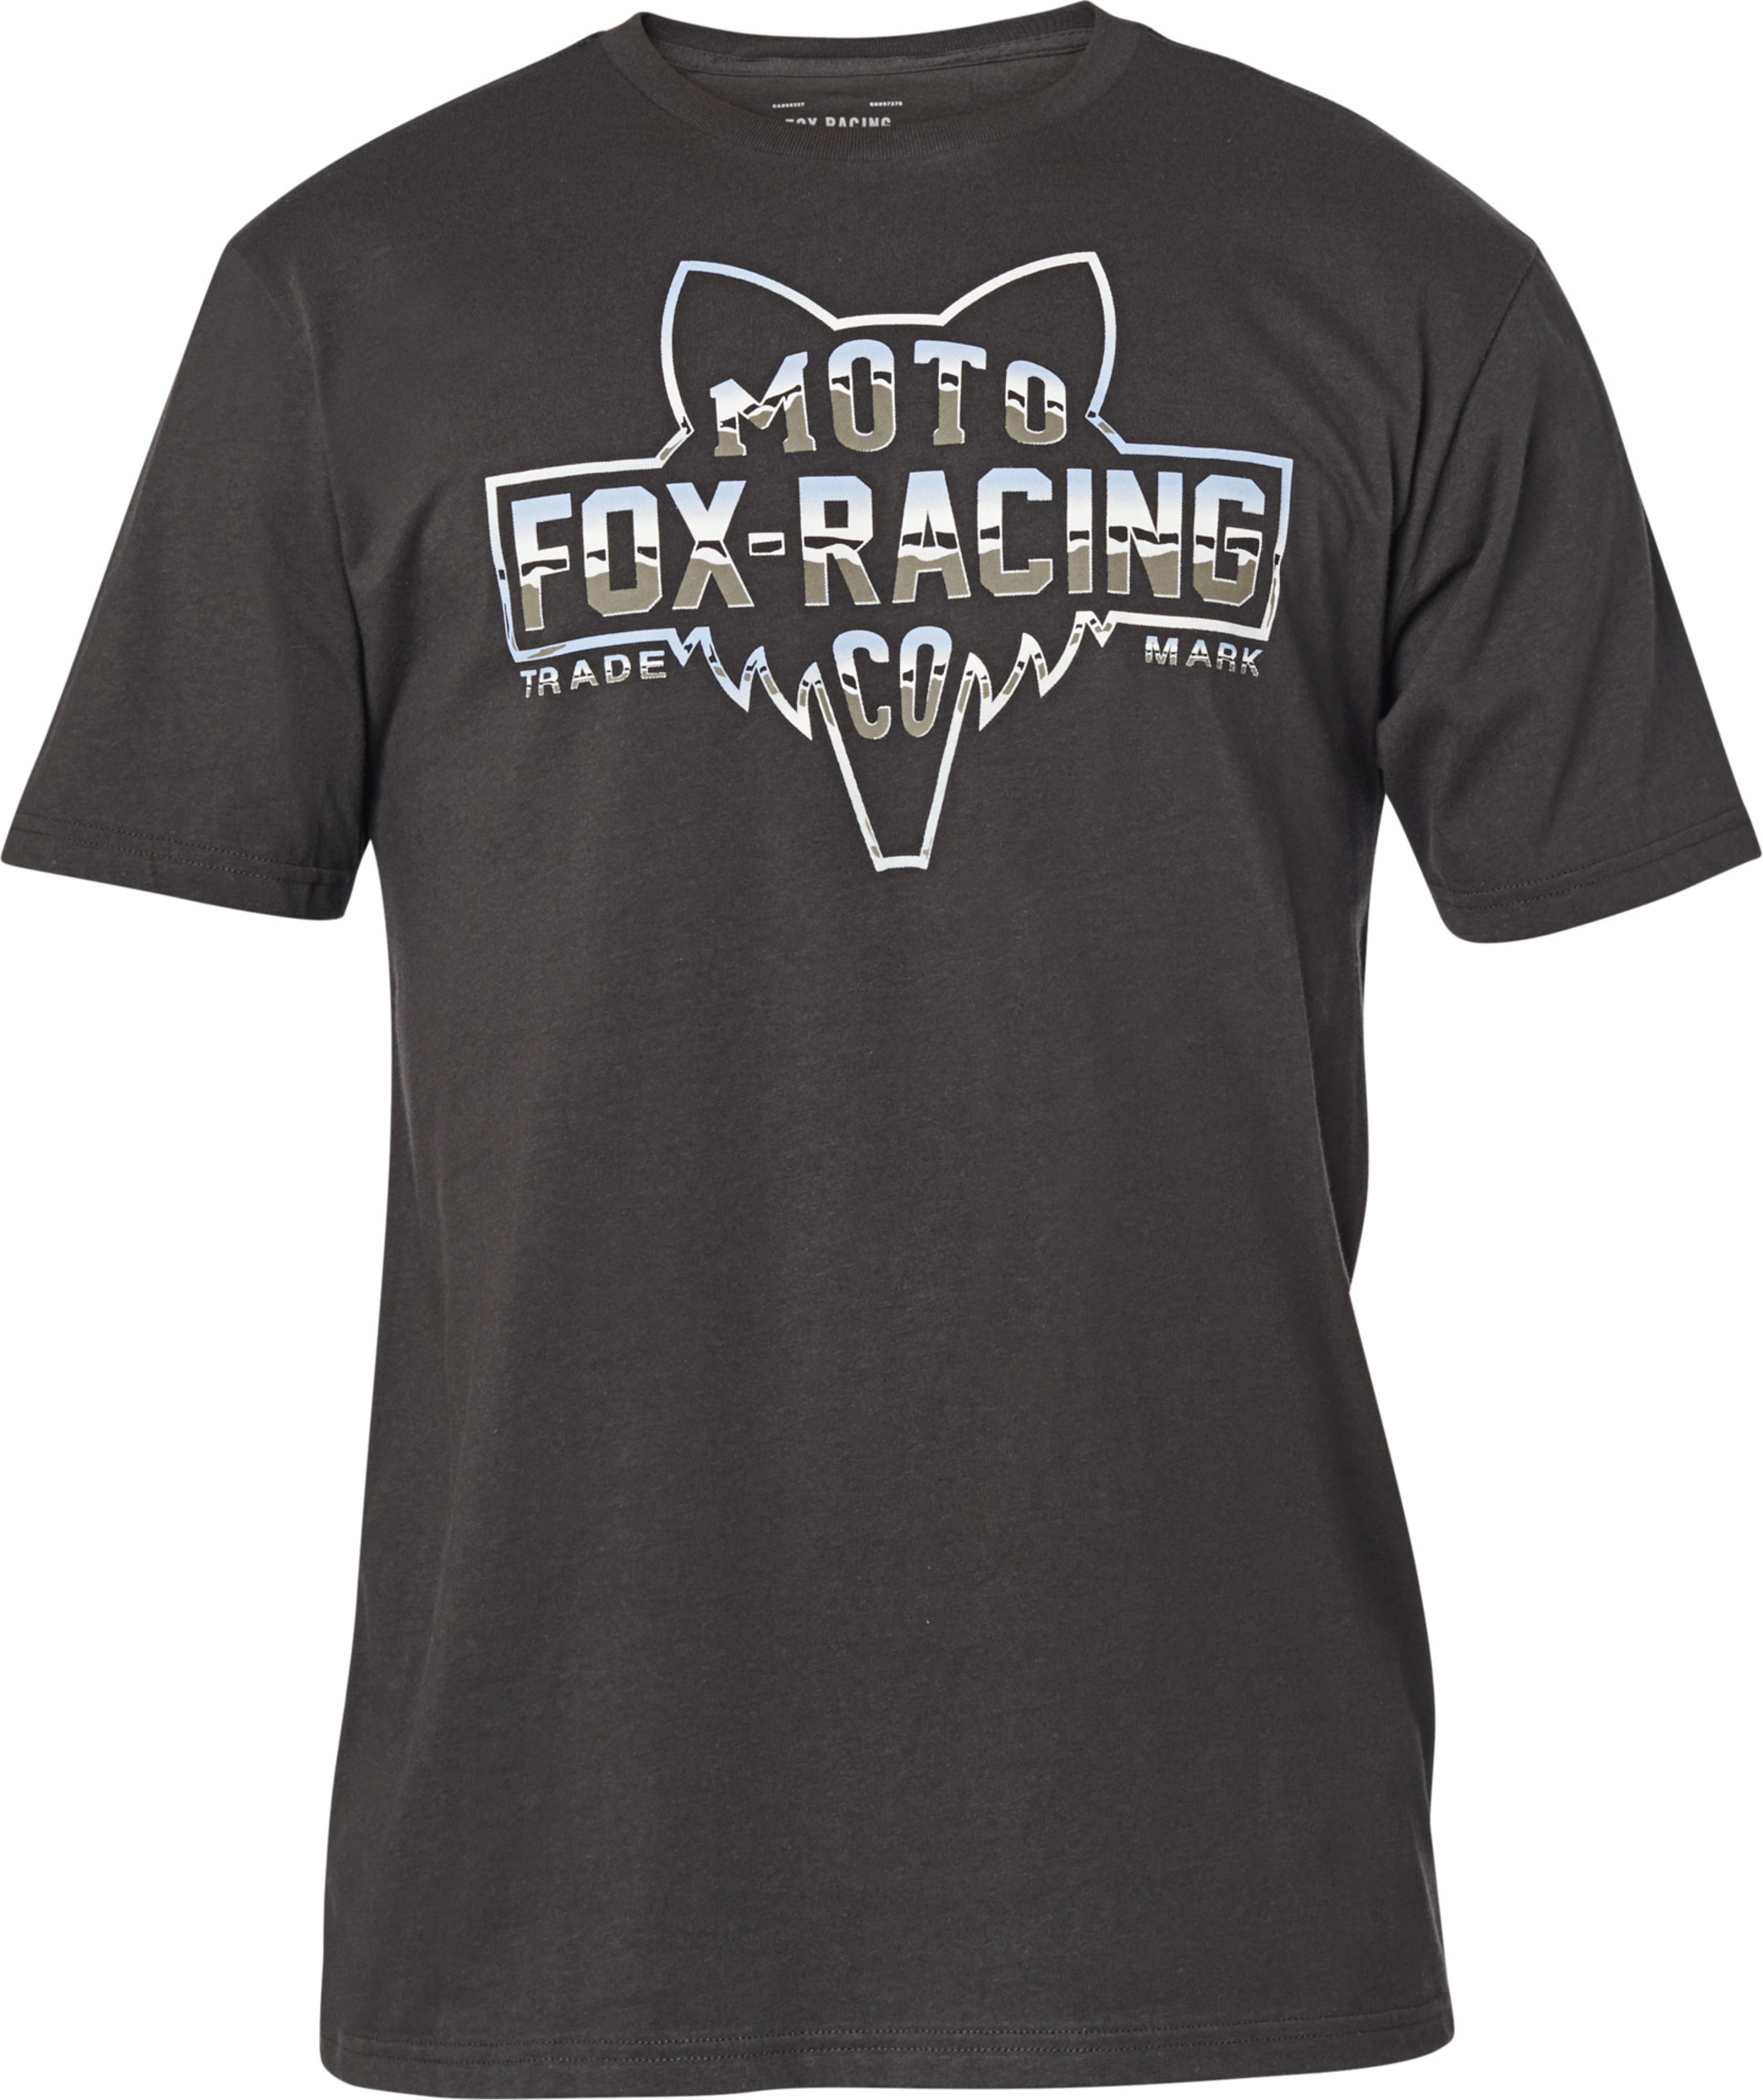 fox racing t-shirt shirts for men chrome flat head premium